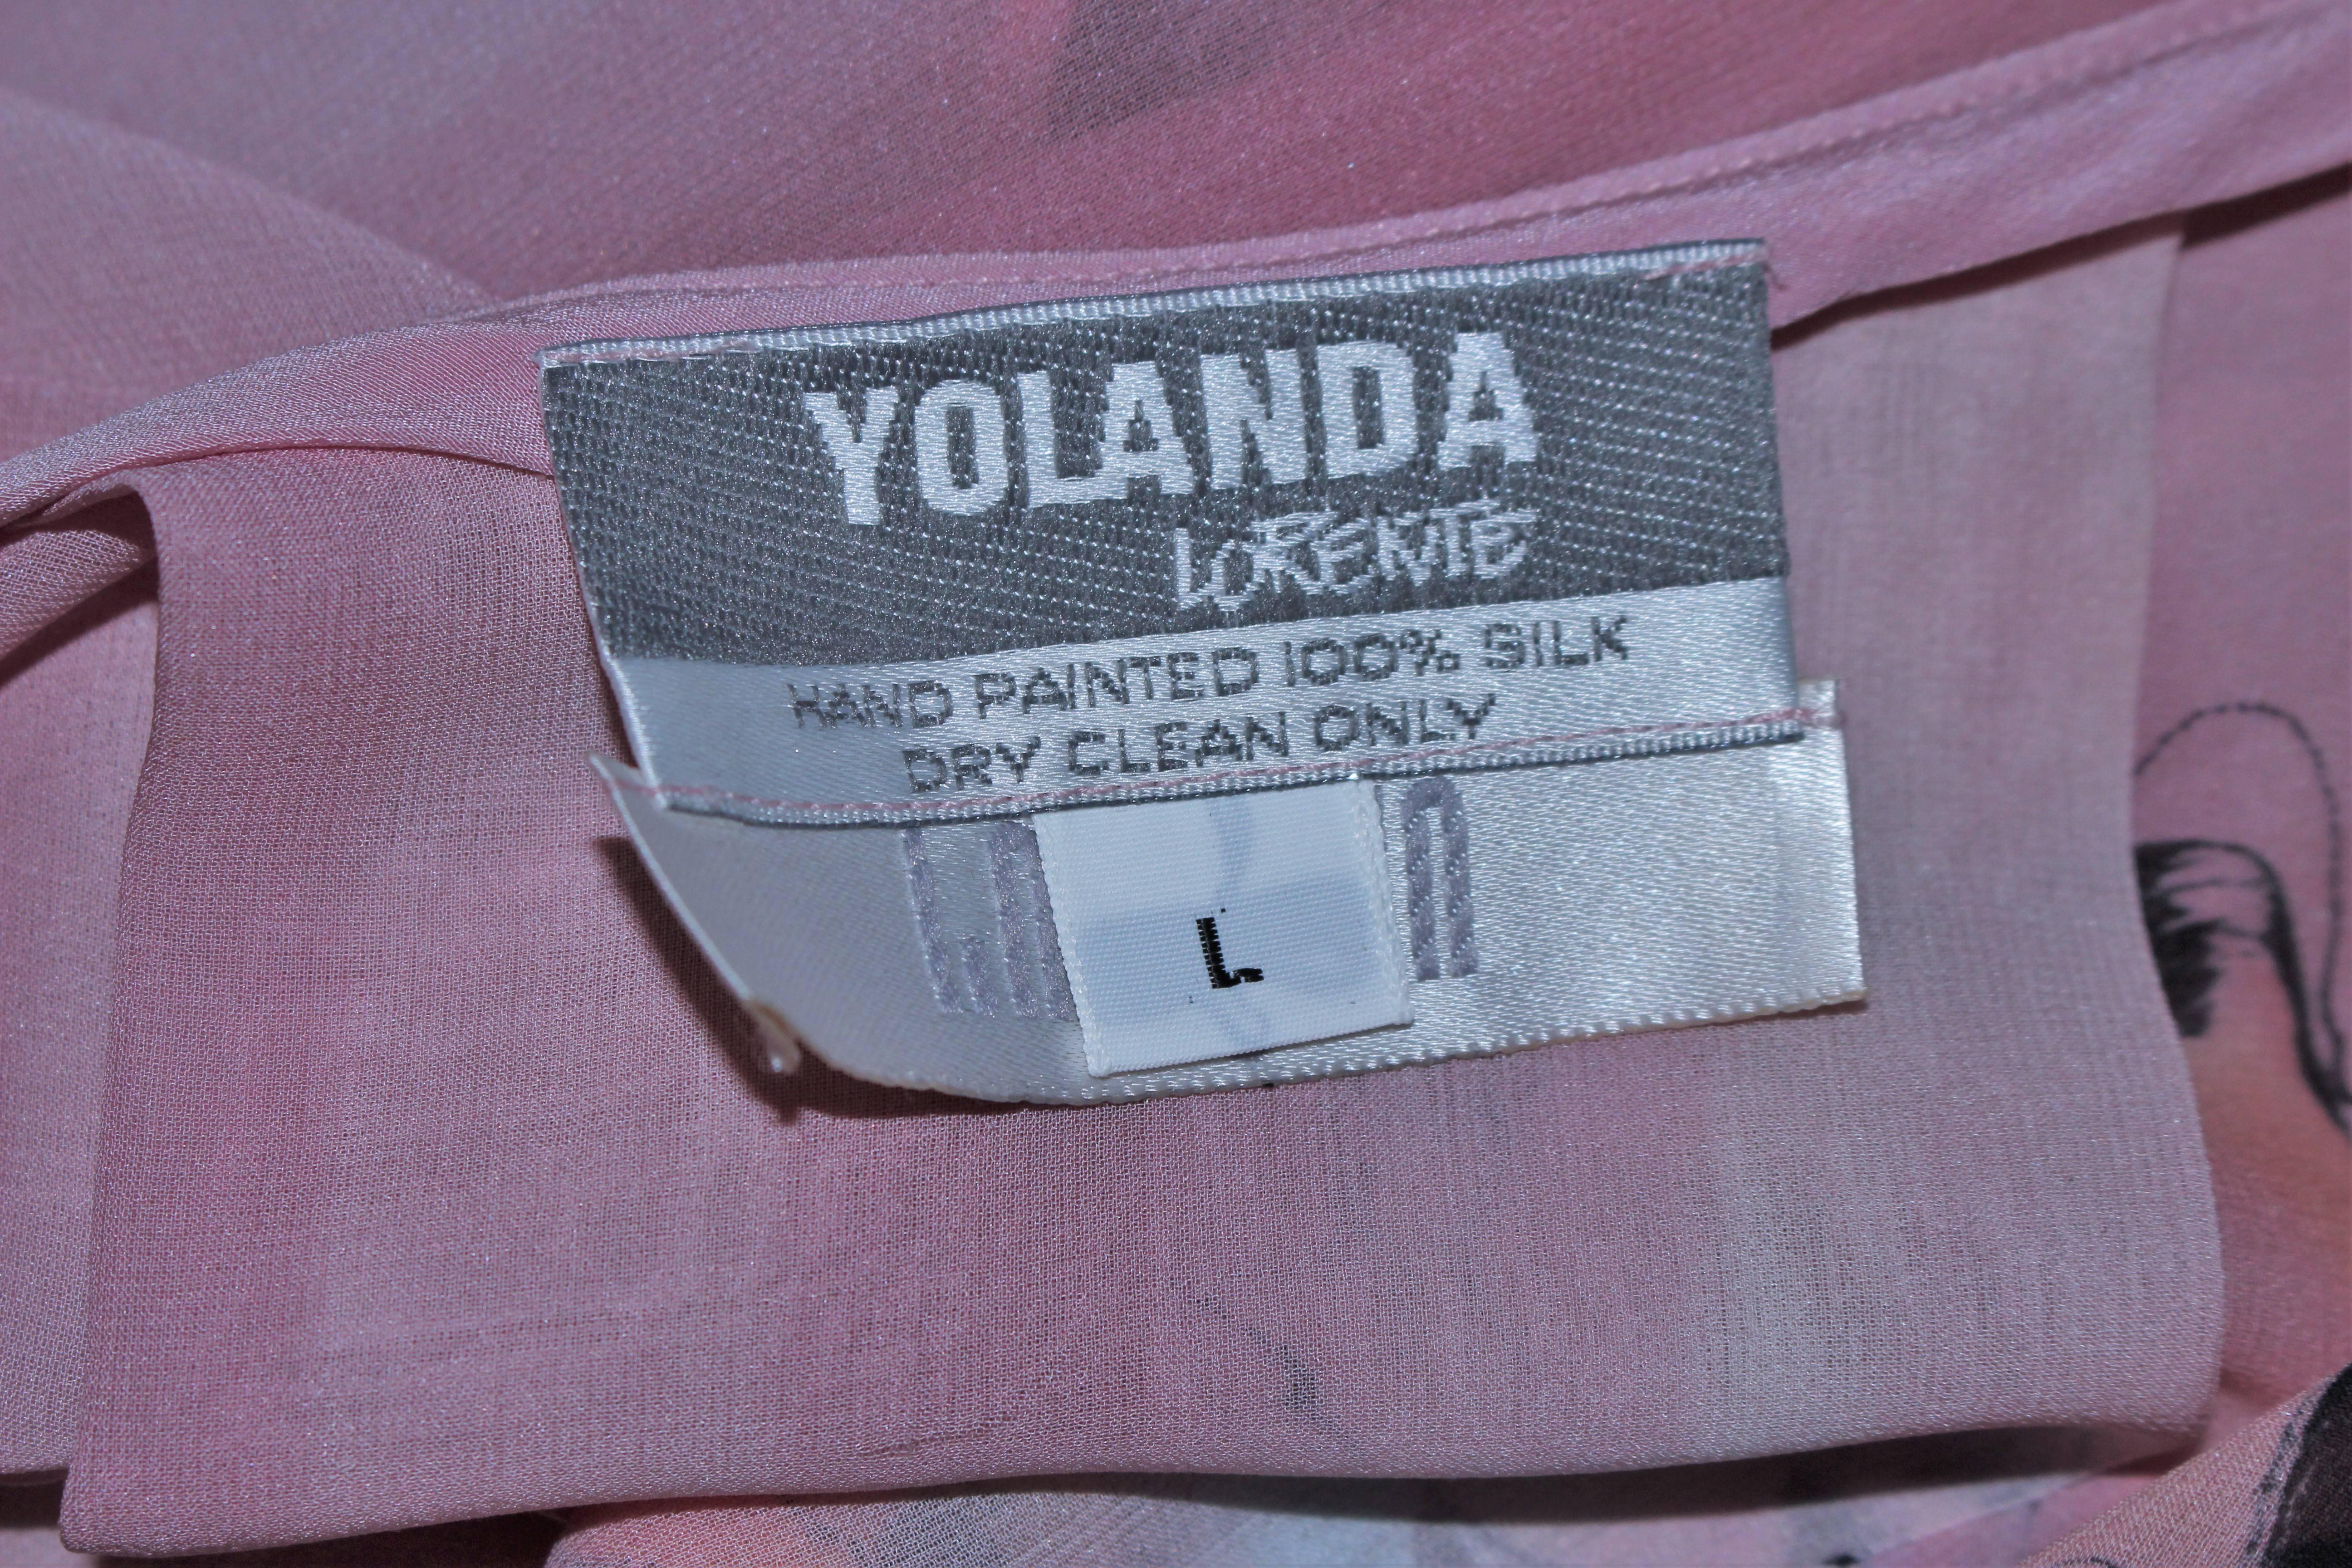 Yolanda Lorente Pink Hand Painted Silk Drape Jacket For Sale 2